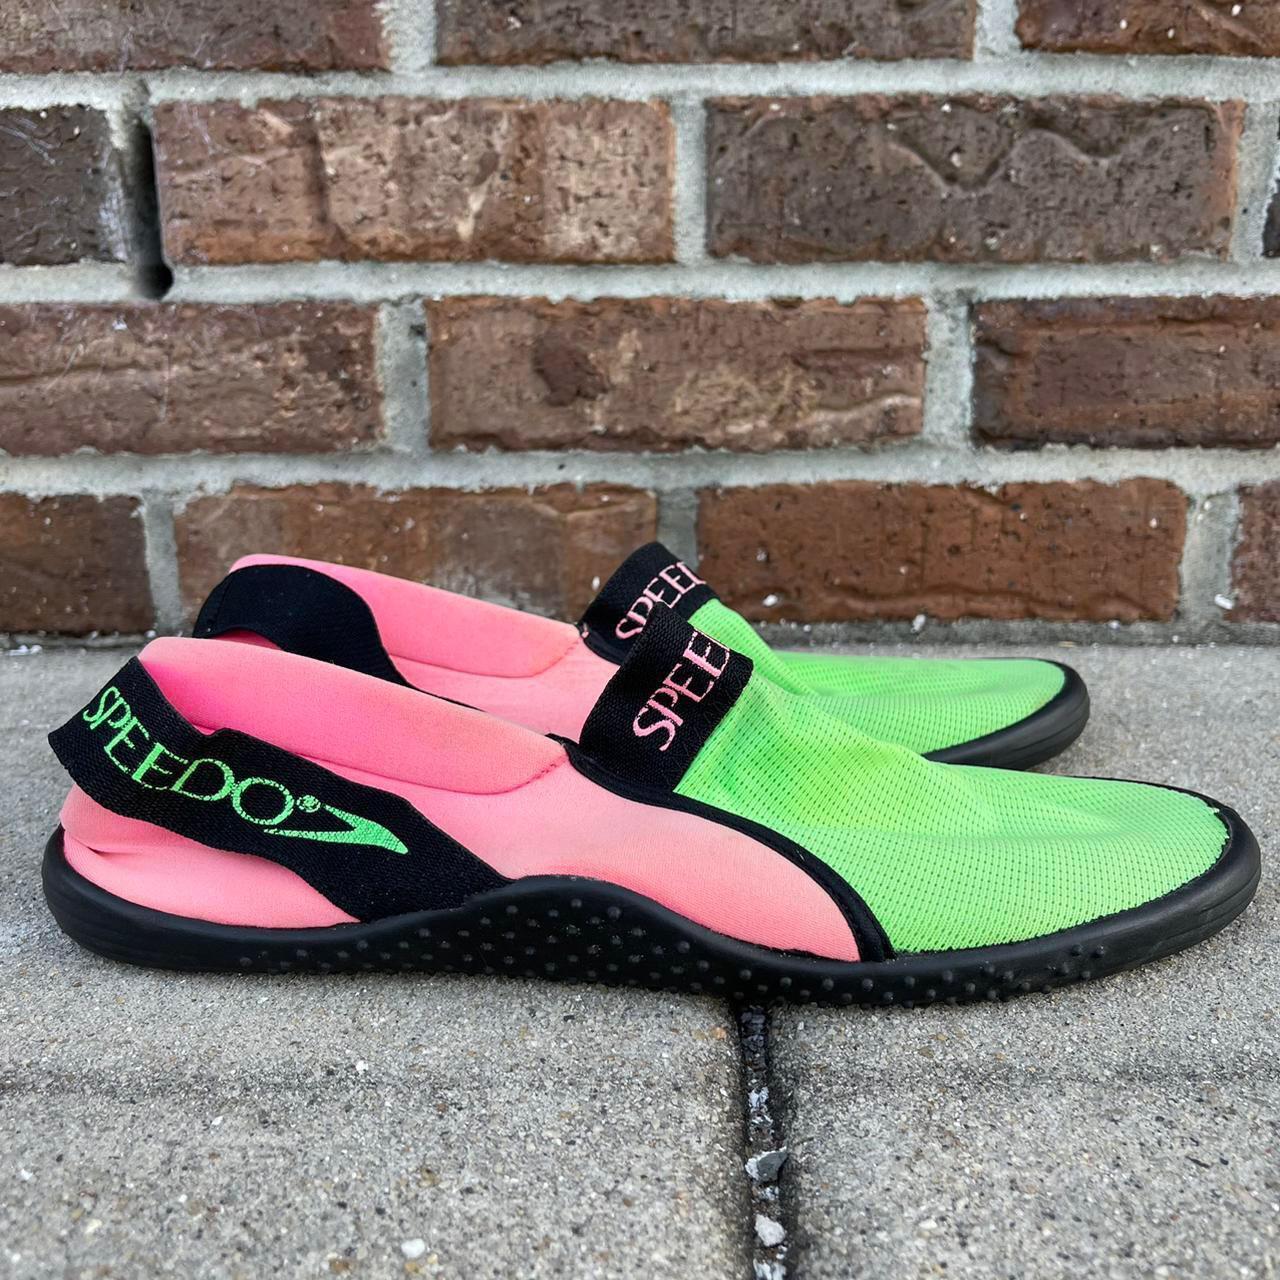 Product Image 1 - Speedo surfwalker vintage water shoes